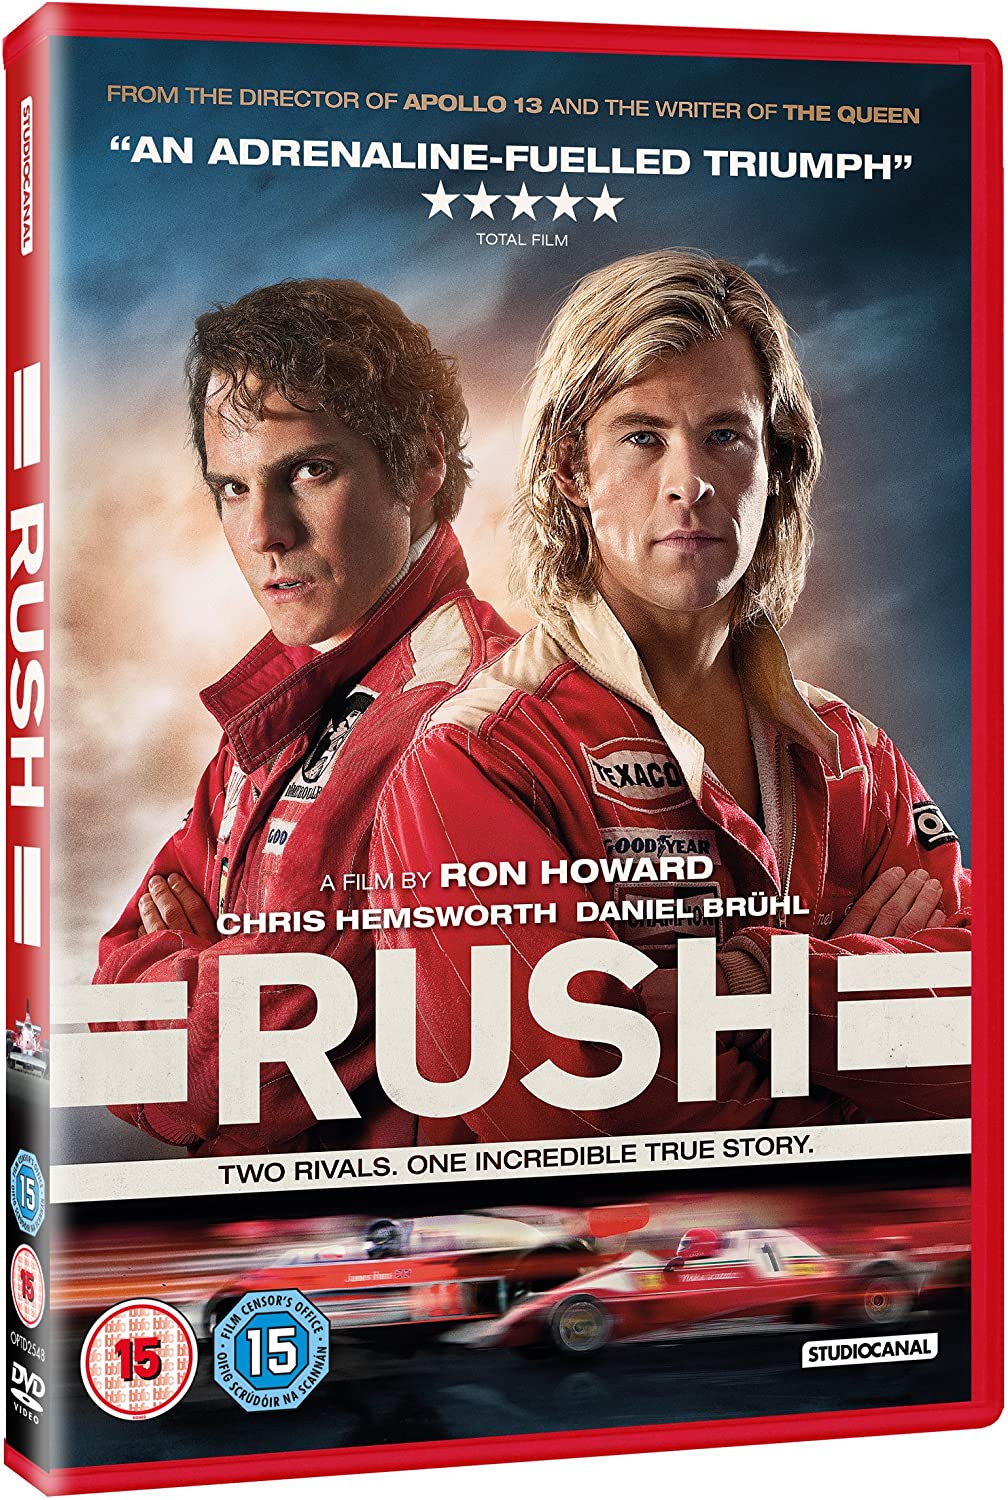 Rush - Action/Sport [DVD]